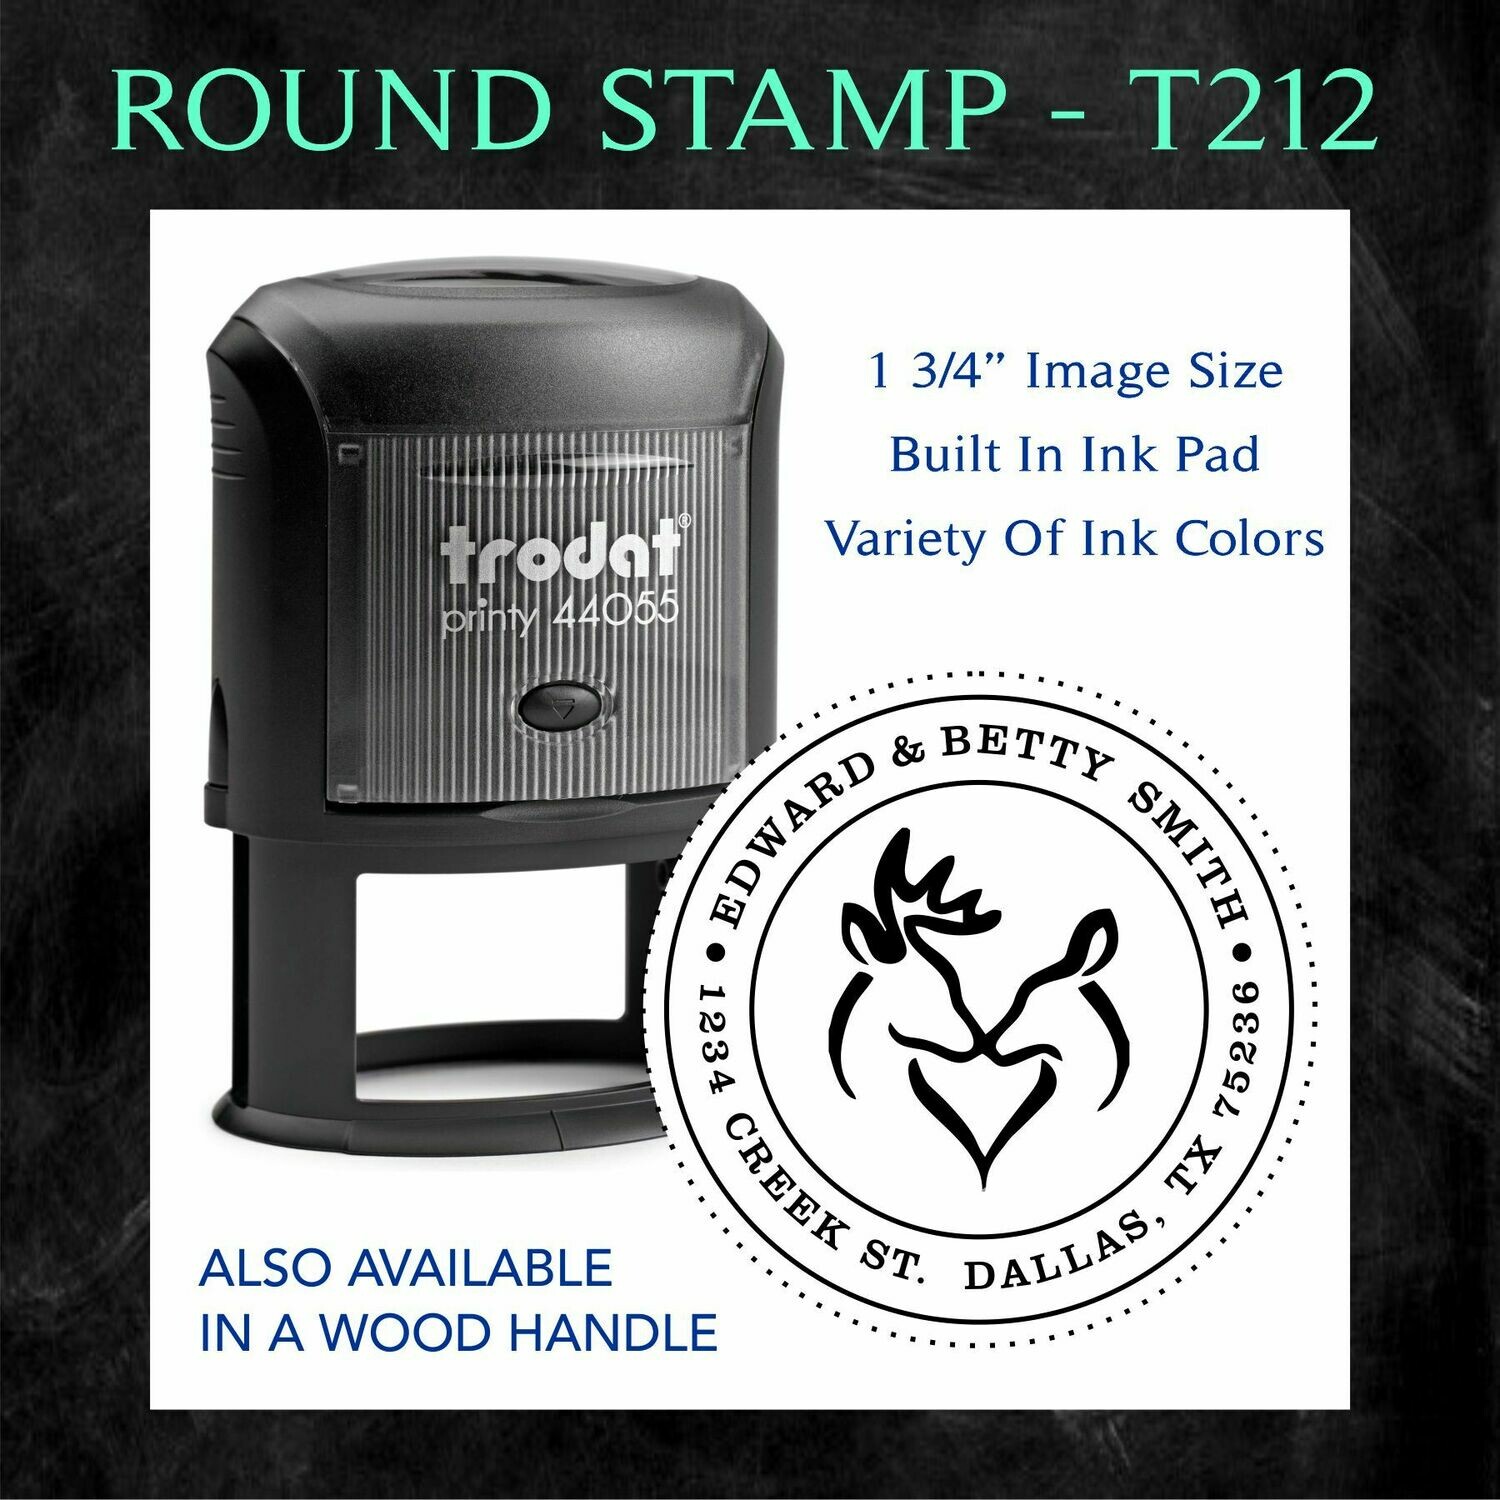 ROUND STAMP - T212